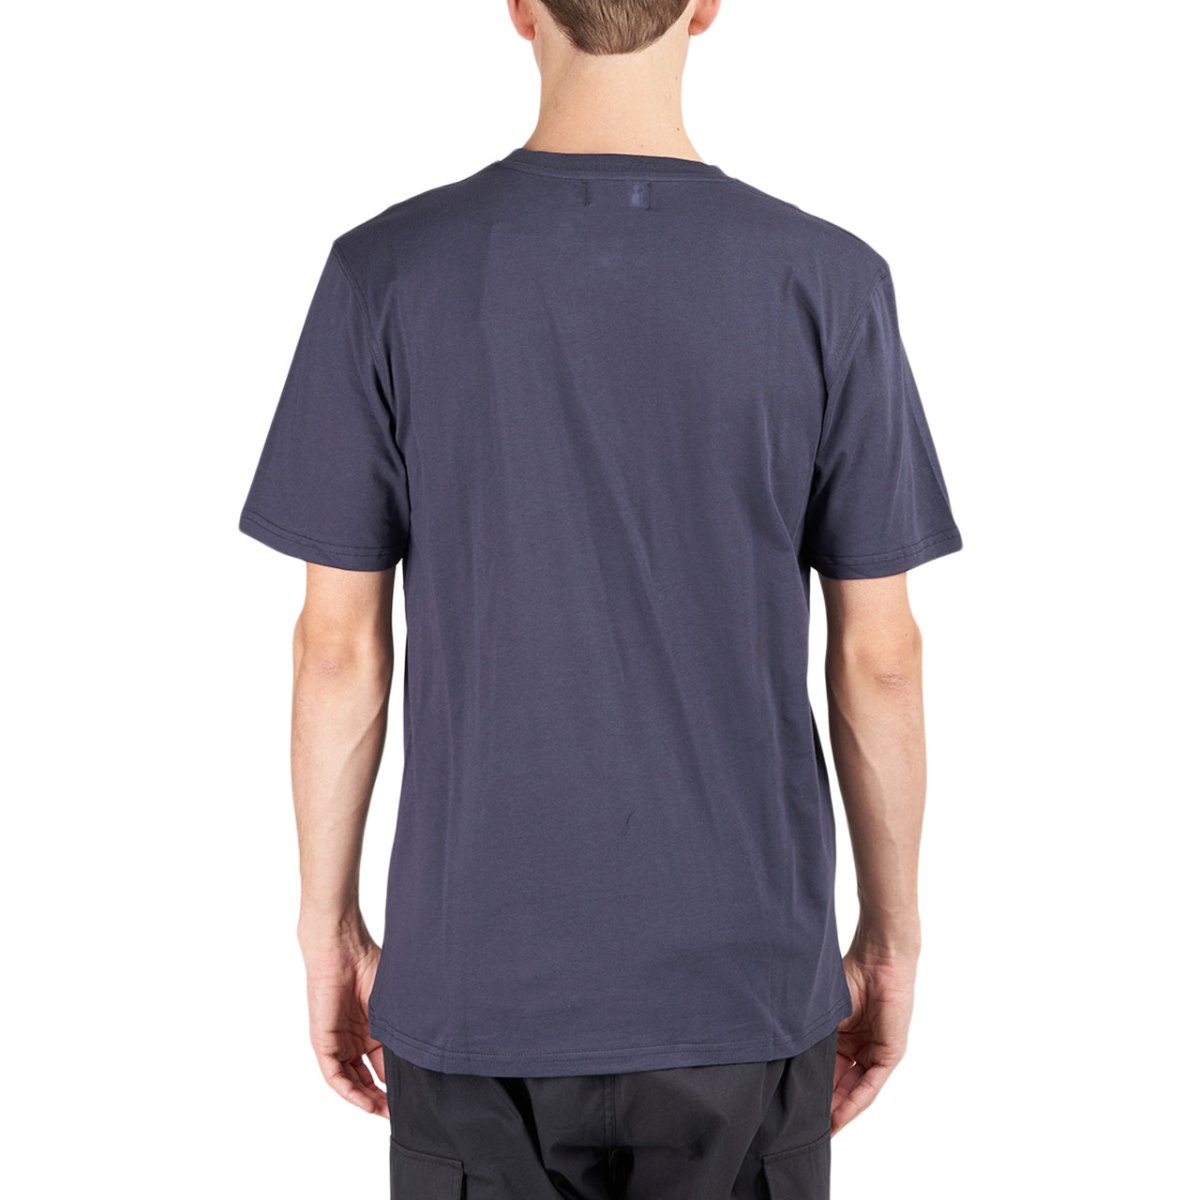 Karhu Basic Logo T-Shirt (Navy)  - Allike Store